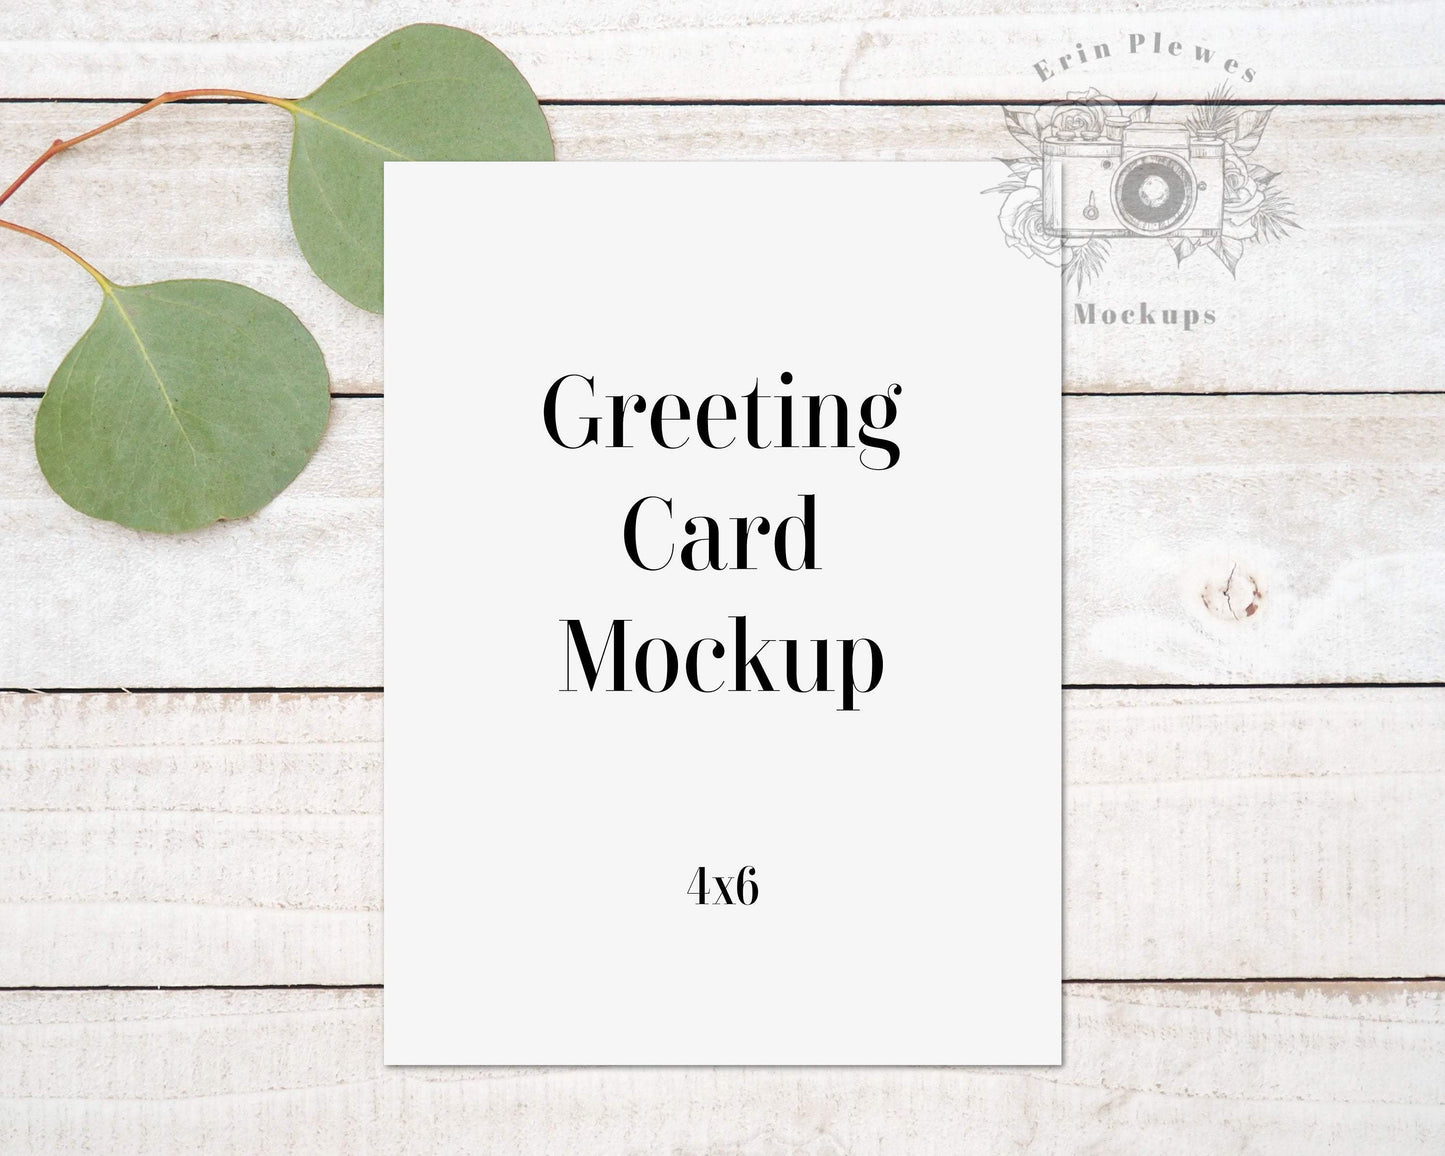 Erin Plewes Mockups 4x6 Card Mockup, 4"x6" Print Mock up on Rustic Wood, 4 x 6 Card Flat Lay Stock Photo, Instant Digital Download Jpeg Template